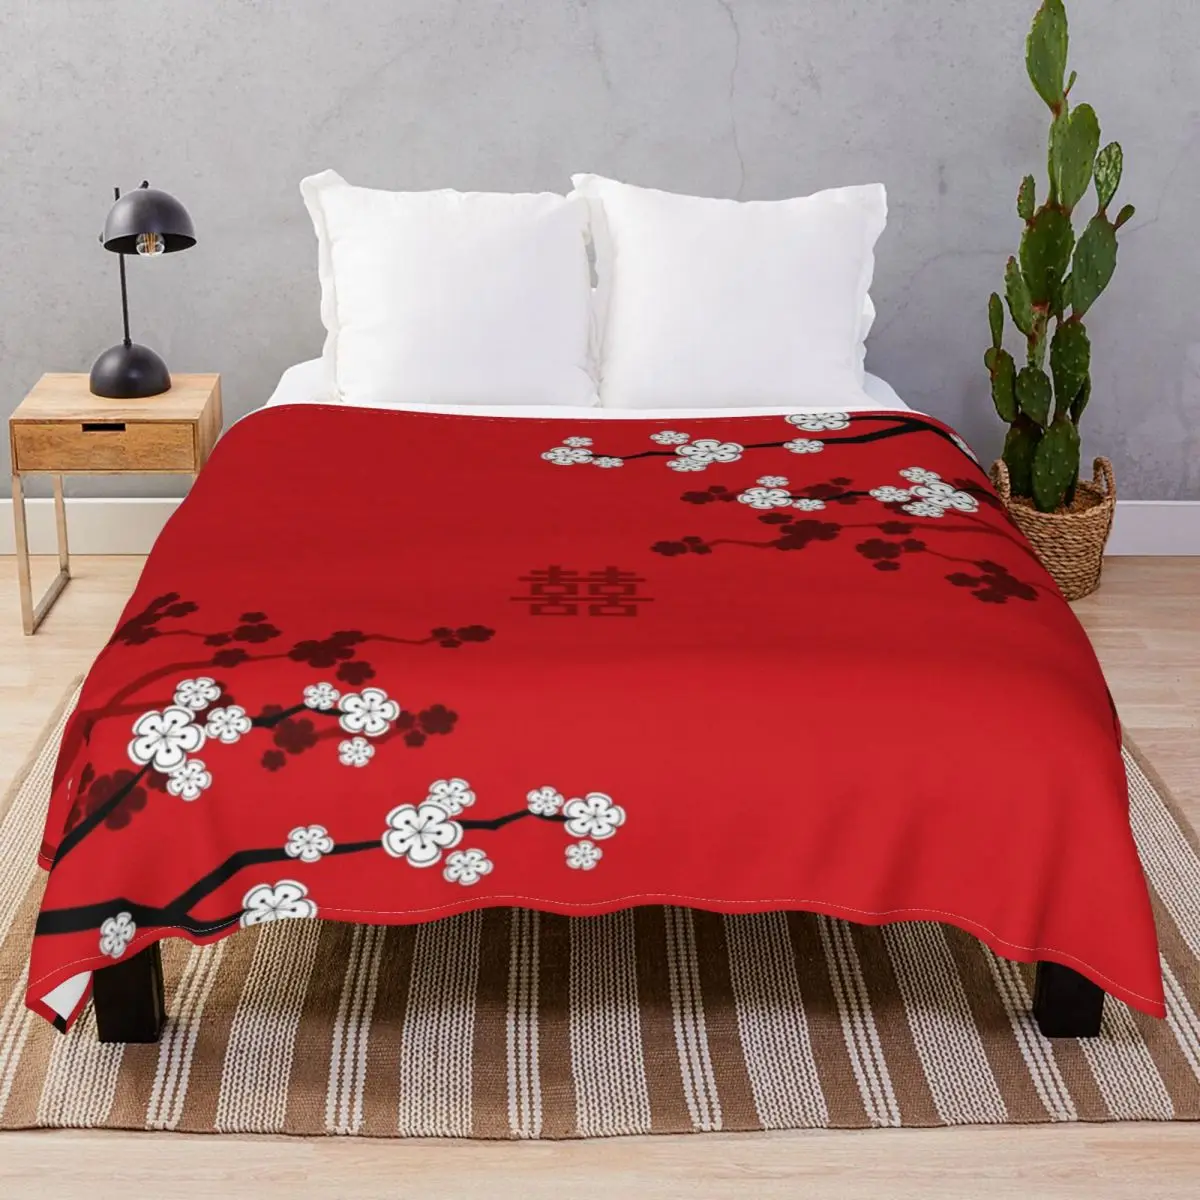 White Oriental Cherry Blossoms Blanket Flannel Decoration Lightweight Unisex Throw Blankets for Bedding Sofa Travel Cinema